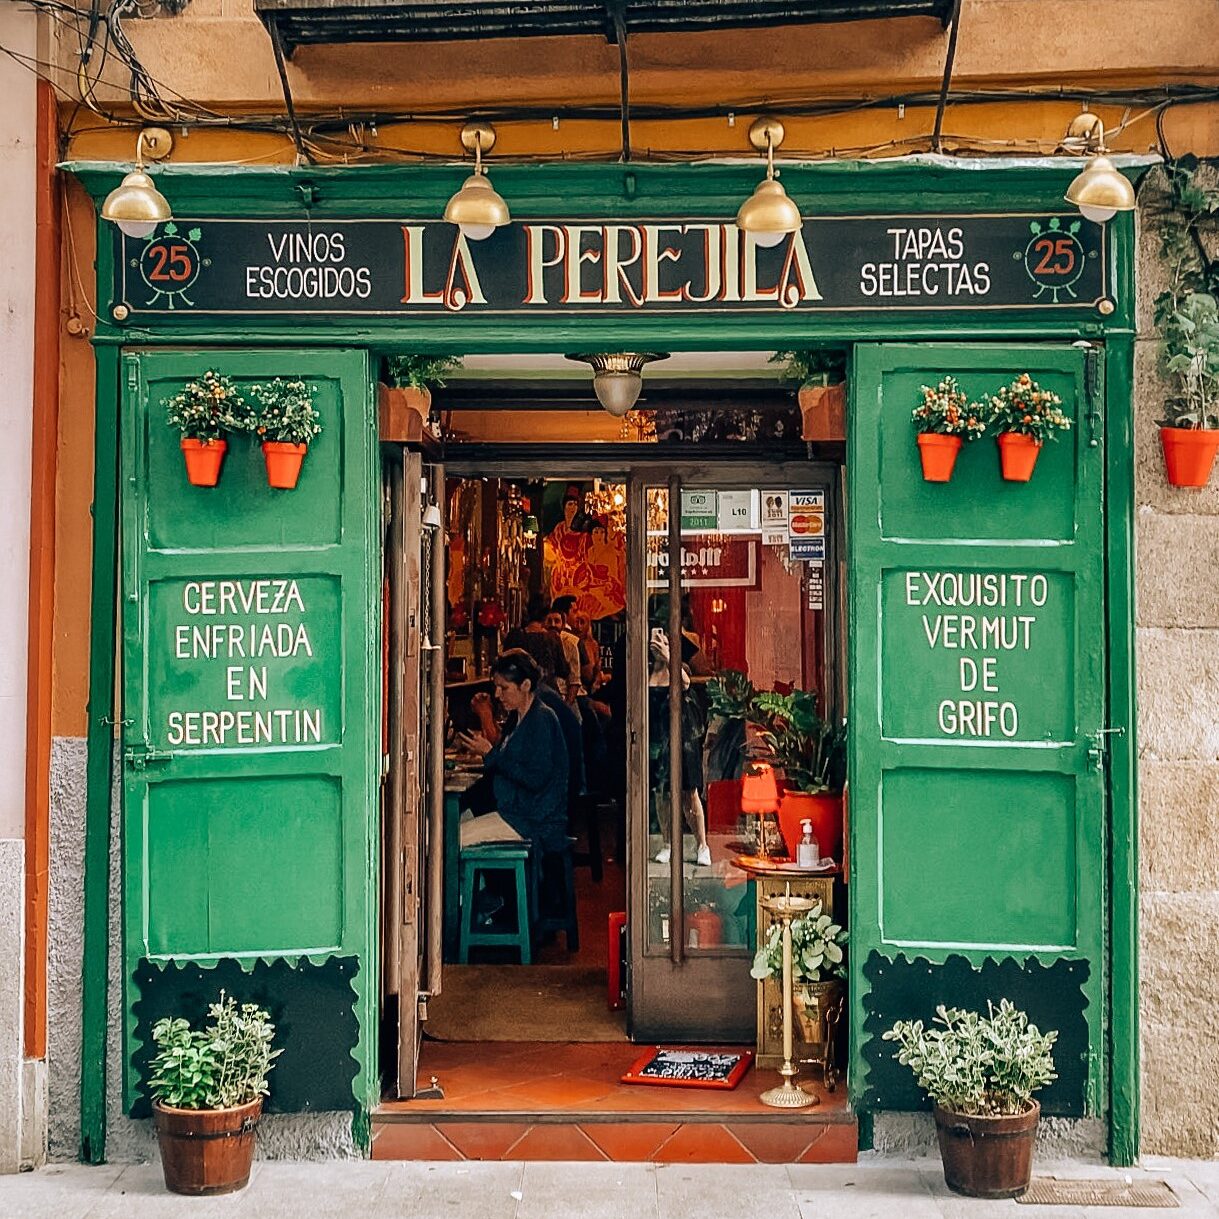 Cava Baja Tapas bar with green exterior and red font